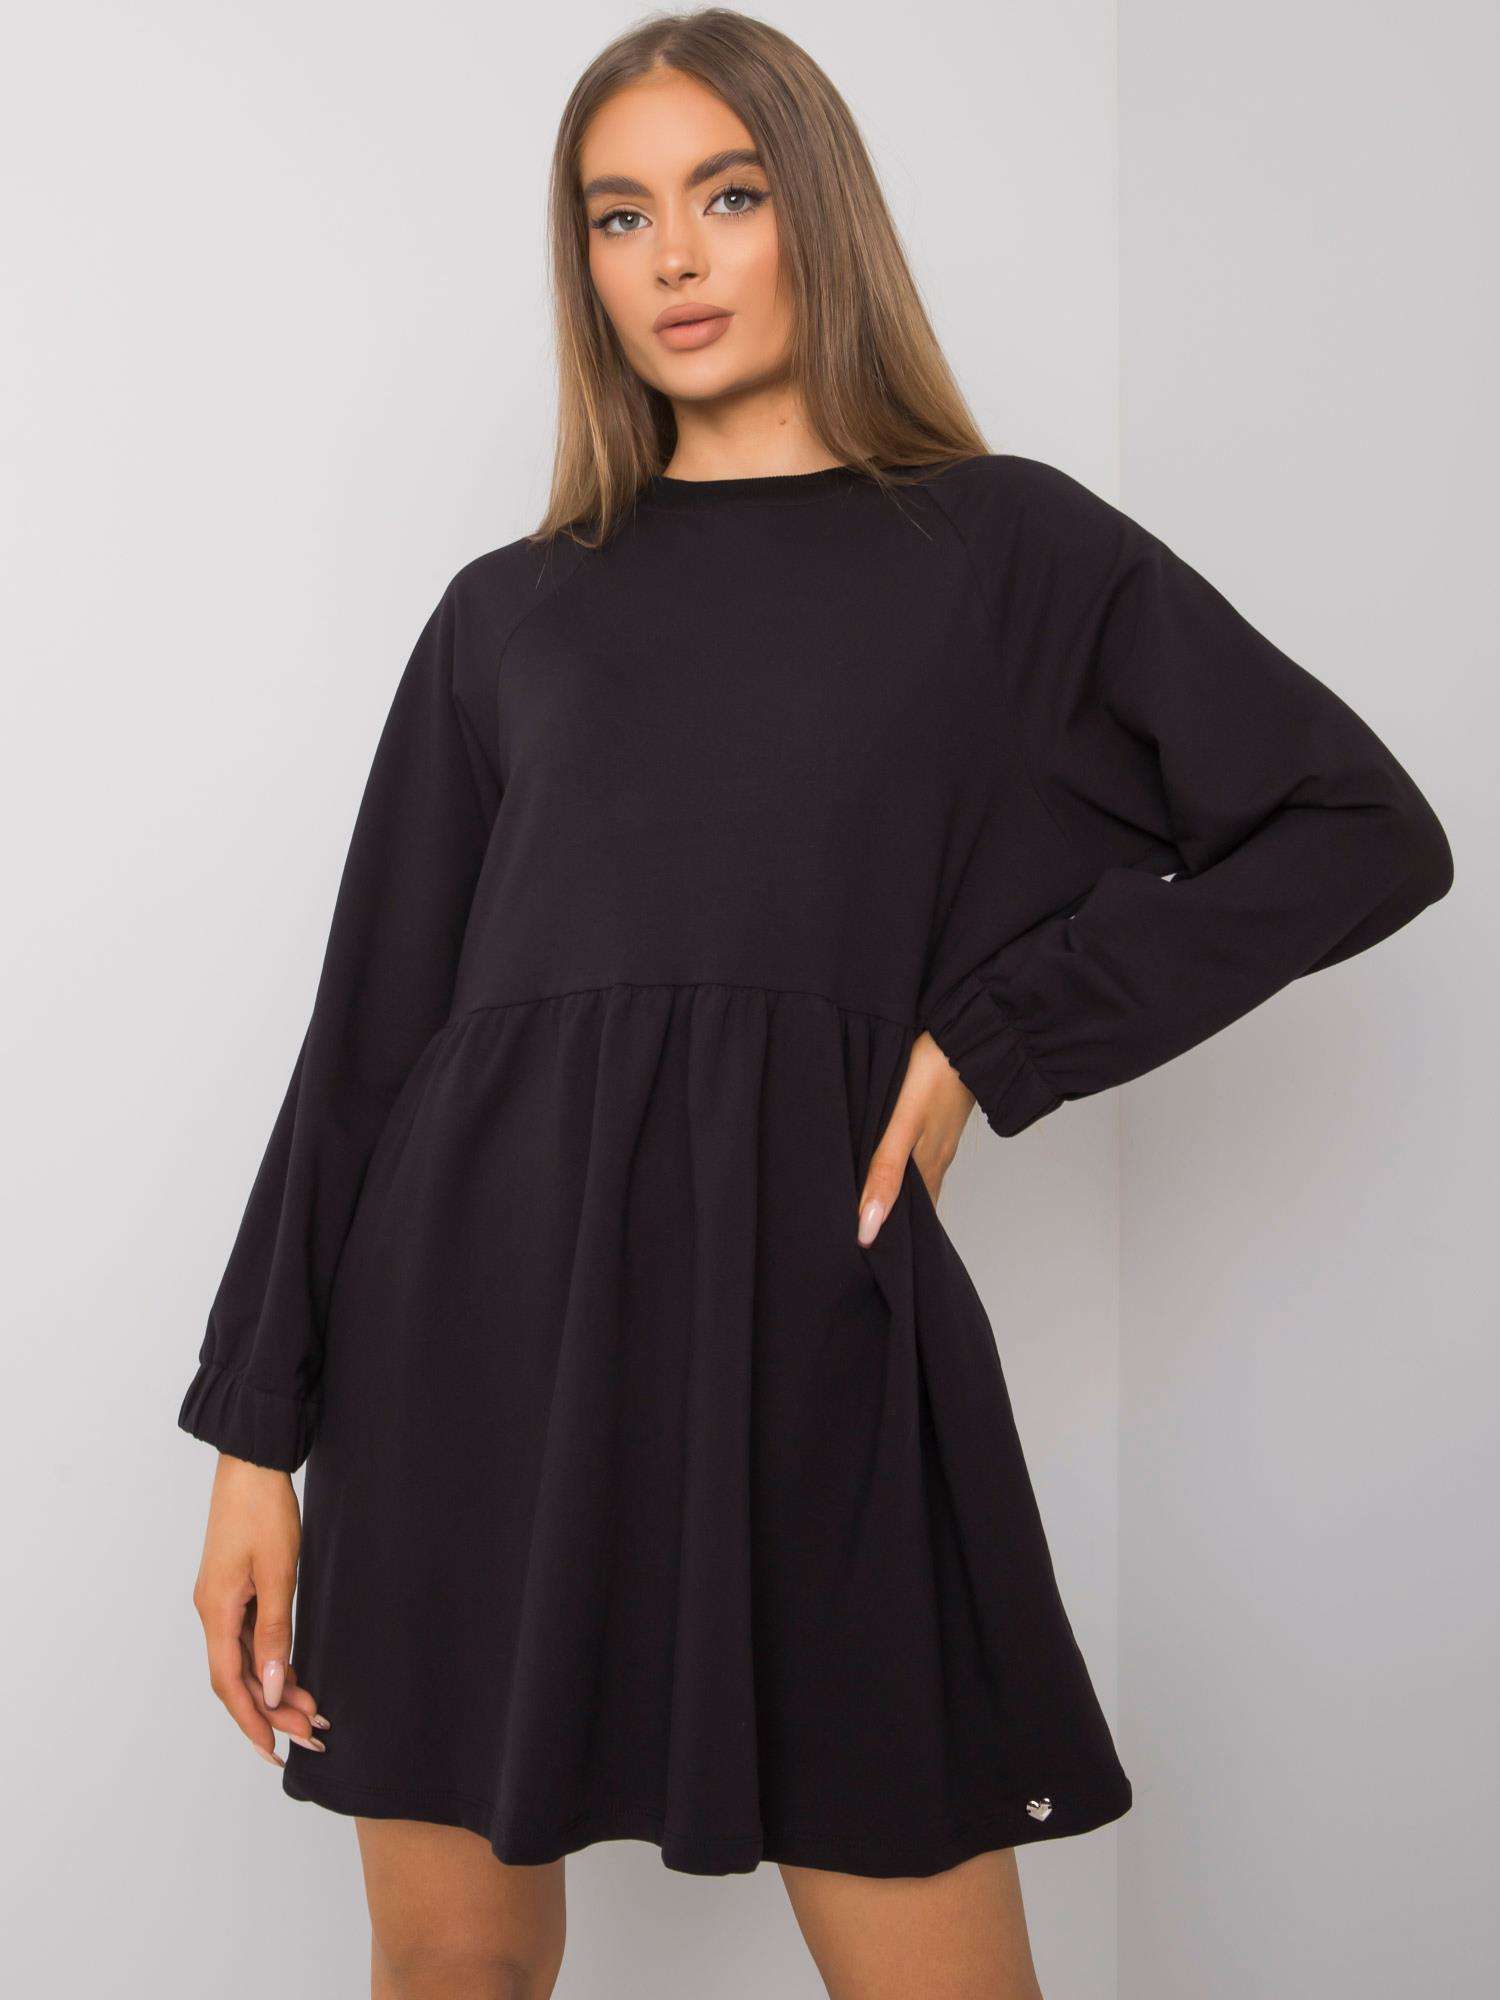 Basic Black Dress With Long Sleeves